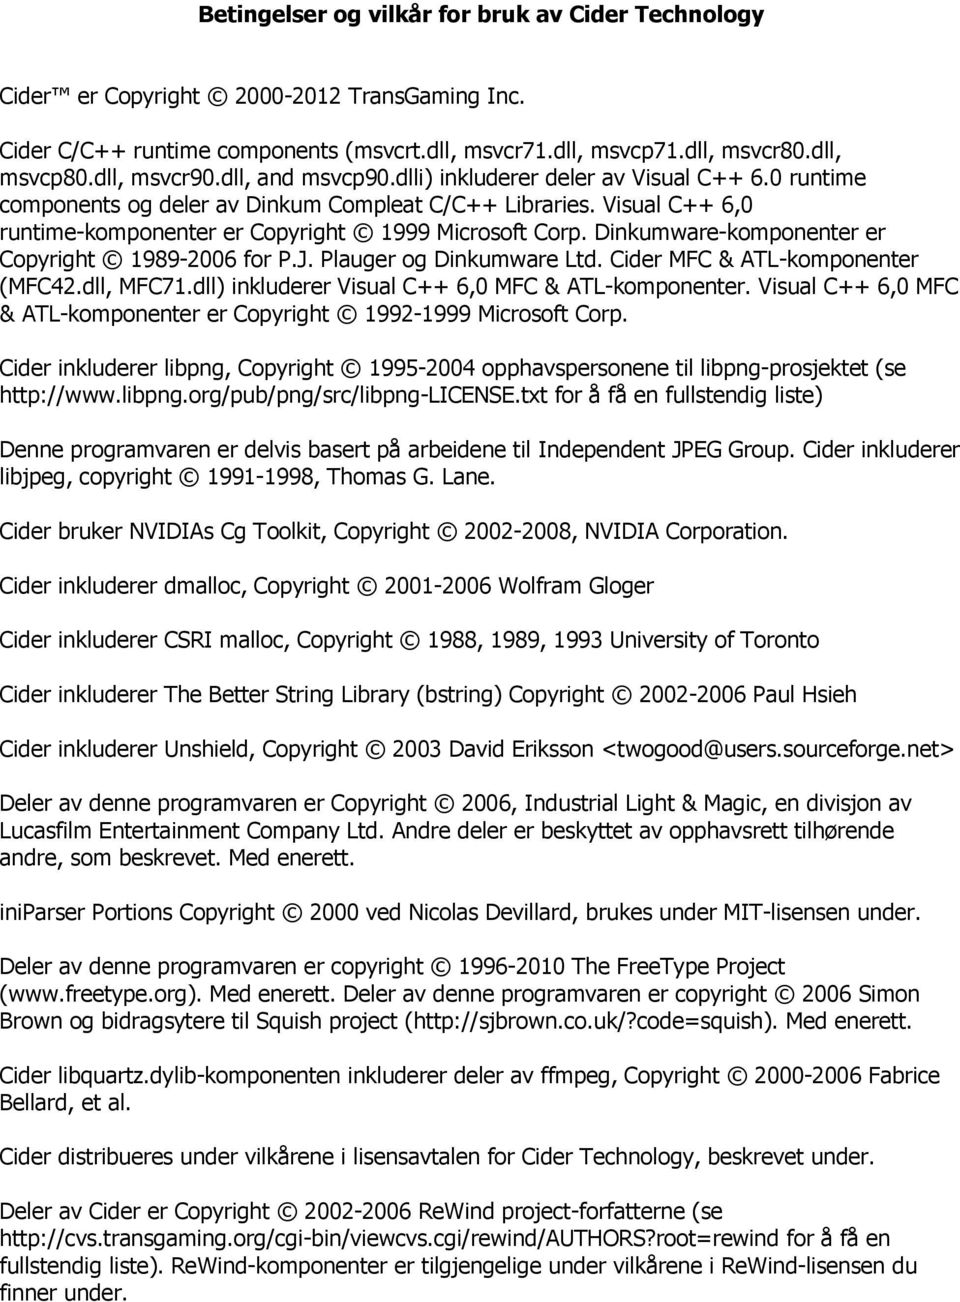 Visual C++ 6,0 runtime-komponenter er Copyright 1999 Microsoft Corp. Dinkumware-komponenter er Copyright 1989-2006 for P.J. Plauger og Dinkumware Ltd. Cider MFC & ATL-komponenter (MFC42.dll, MFC71.